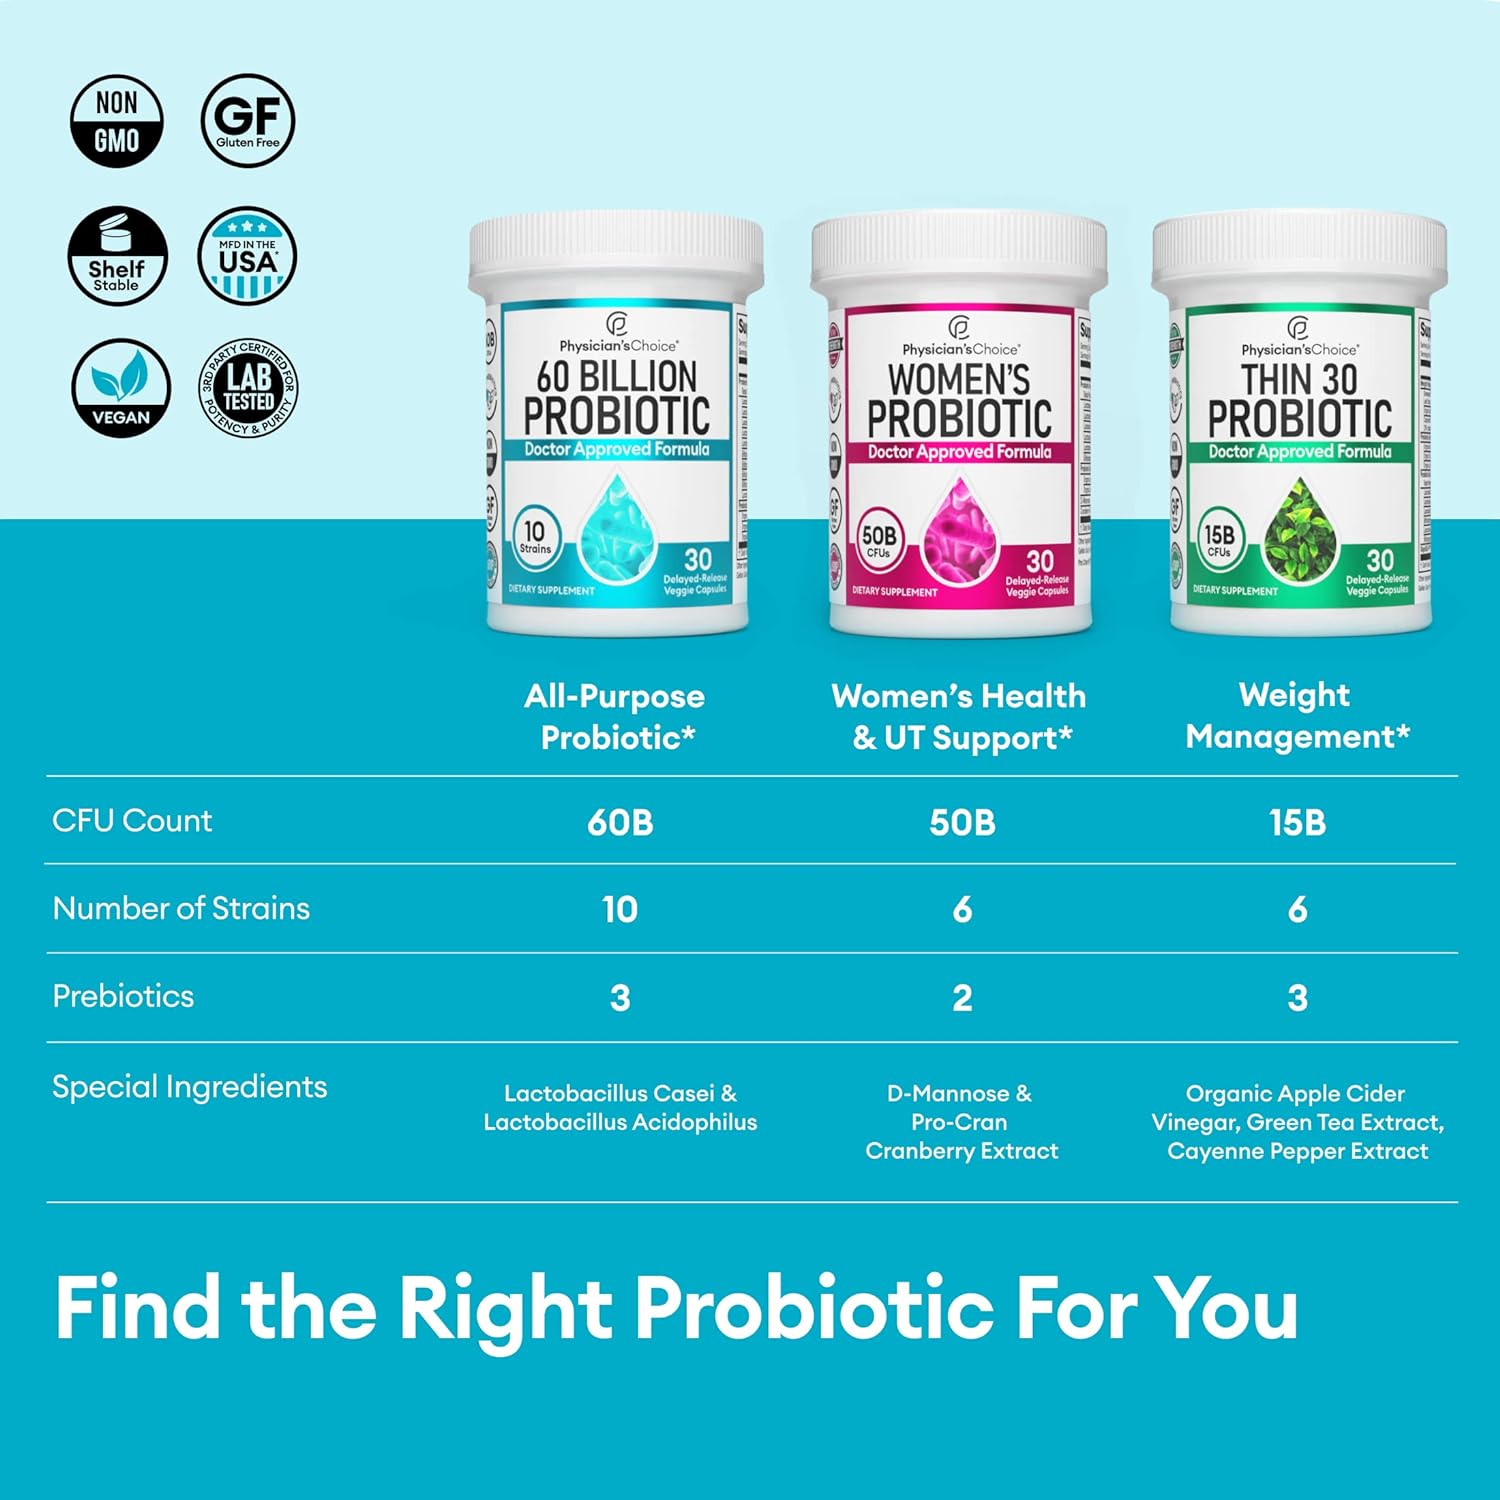 Physician's CHOICE Probiotics 60 Billion CFU - 10 Strains + Organic Prebiotics - Digestive & Gut Health - Supports Occasional Constipation, Diarrhea, Gas & Bloating - For Women & Men - 30ct